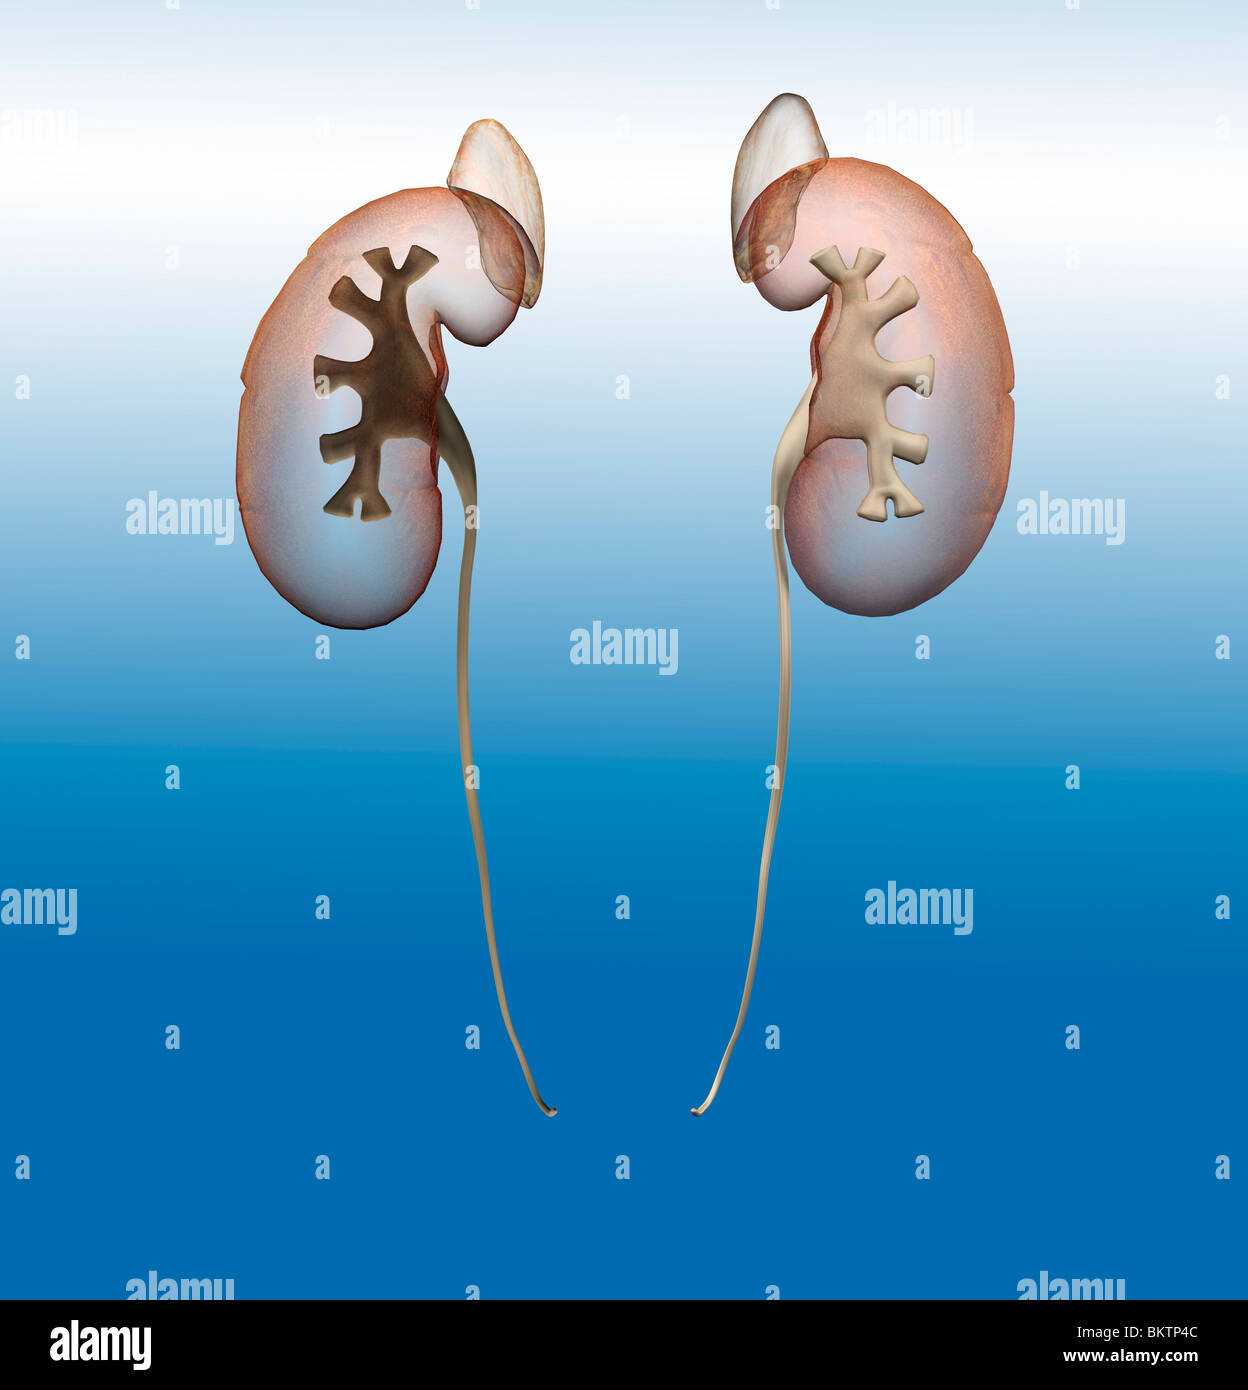 anatomy kidney Stock Photo